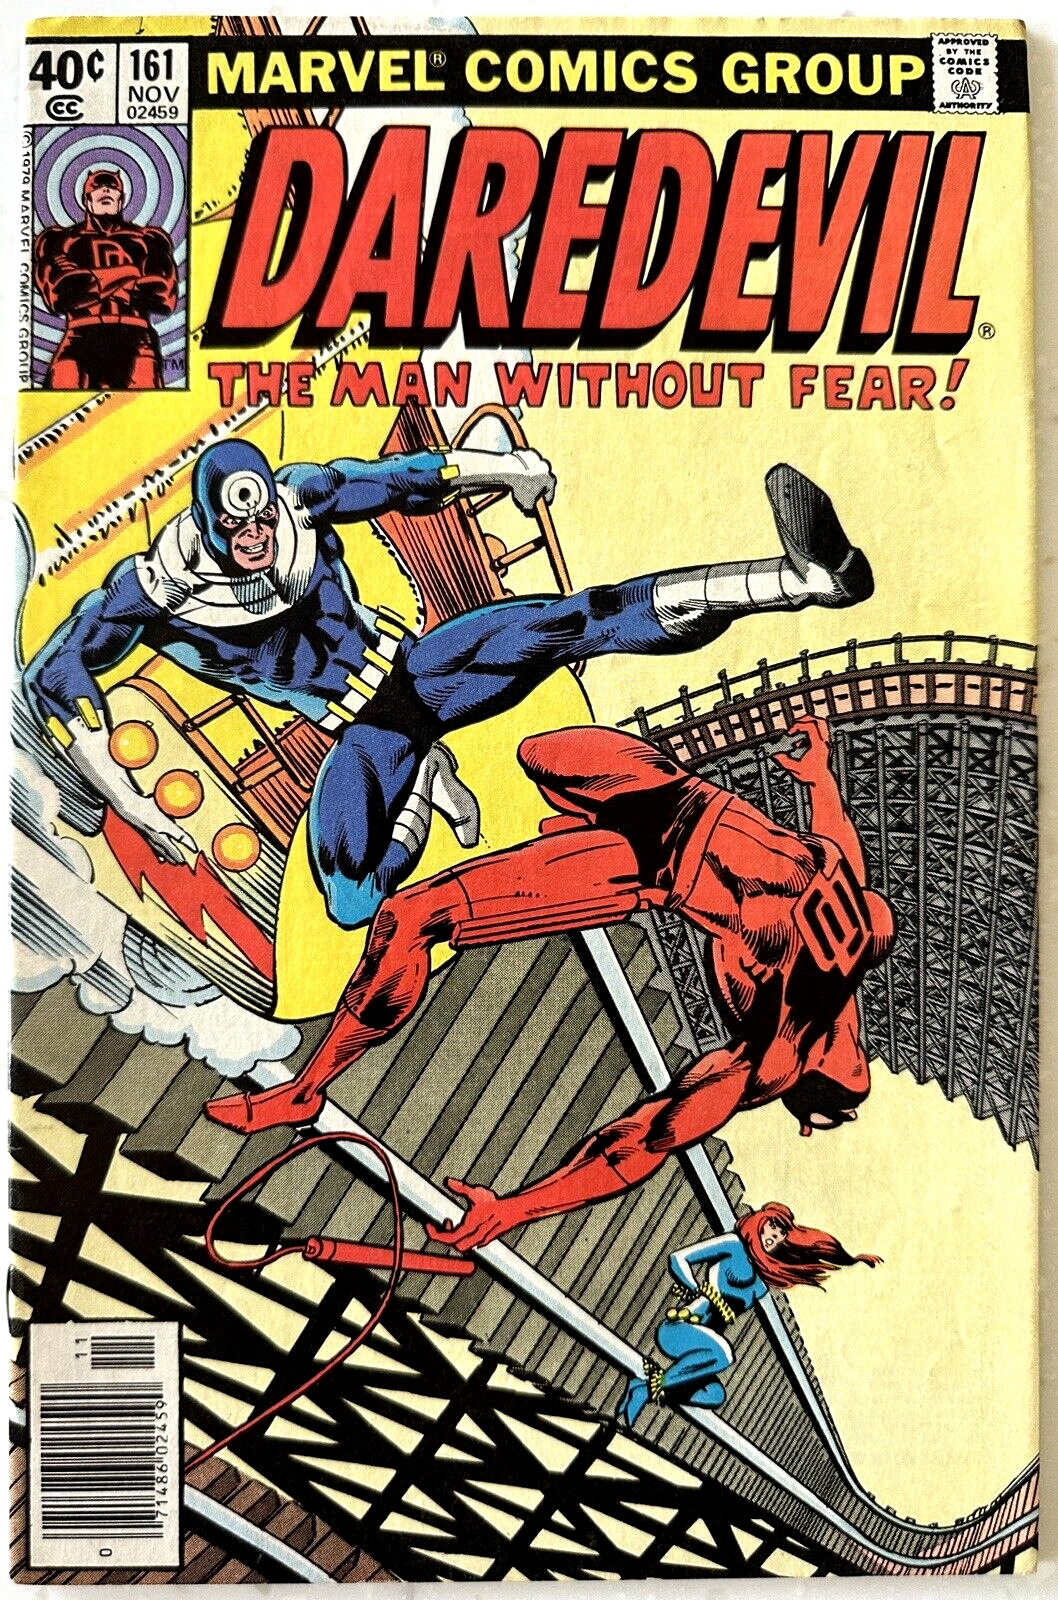 Daredevil #161 VF+ (1979) Early Frank Miller, Bullseye, Black Widow - Newsstand